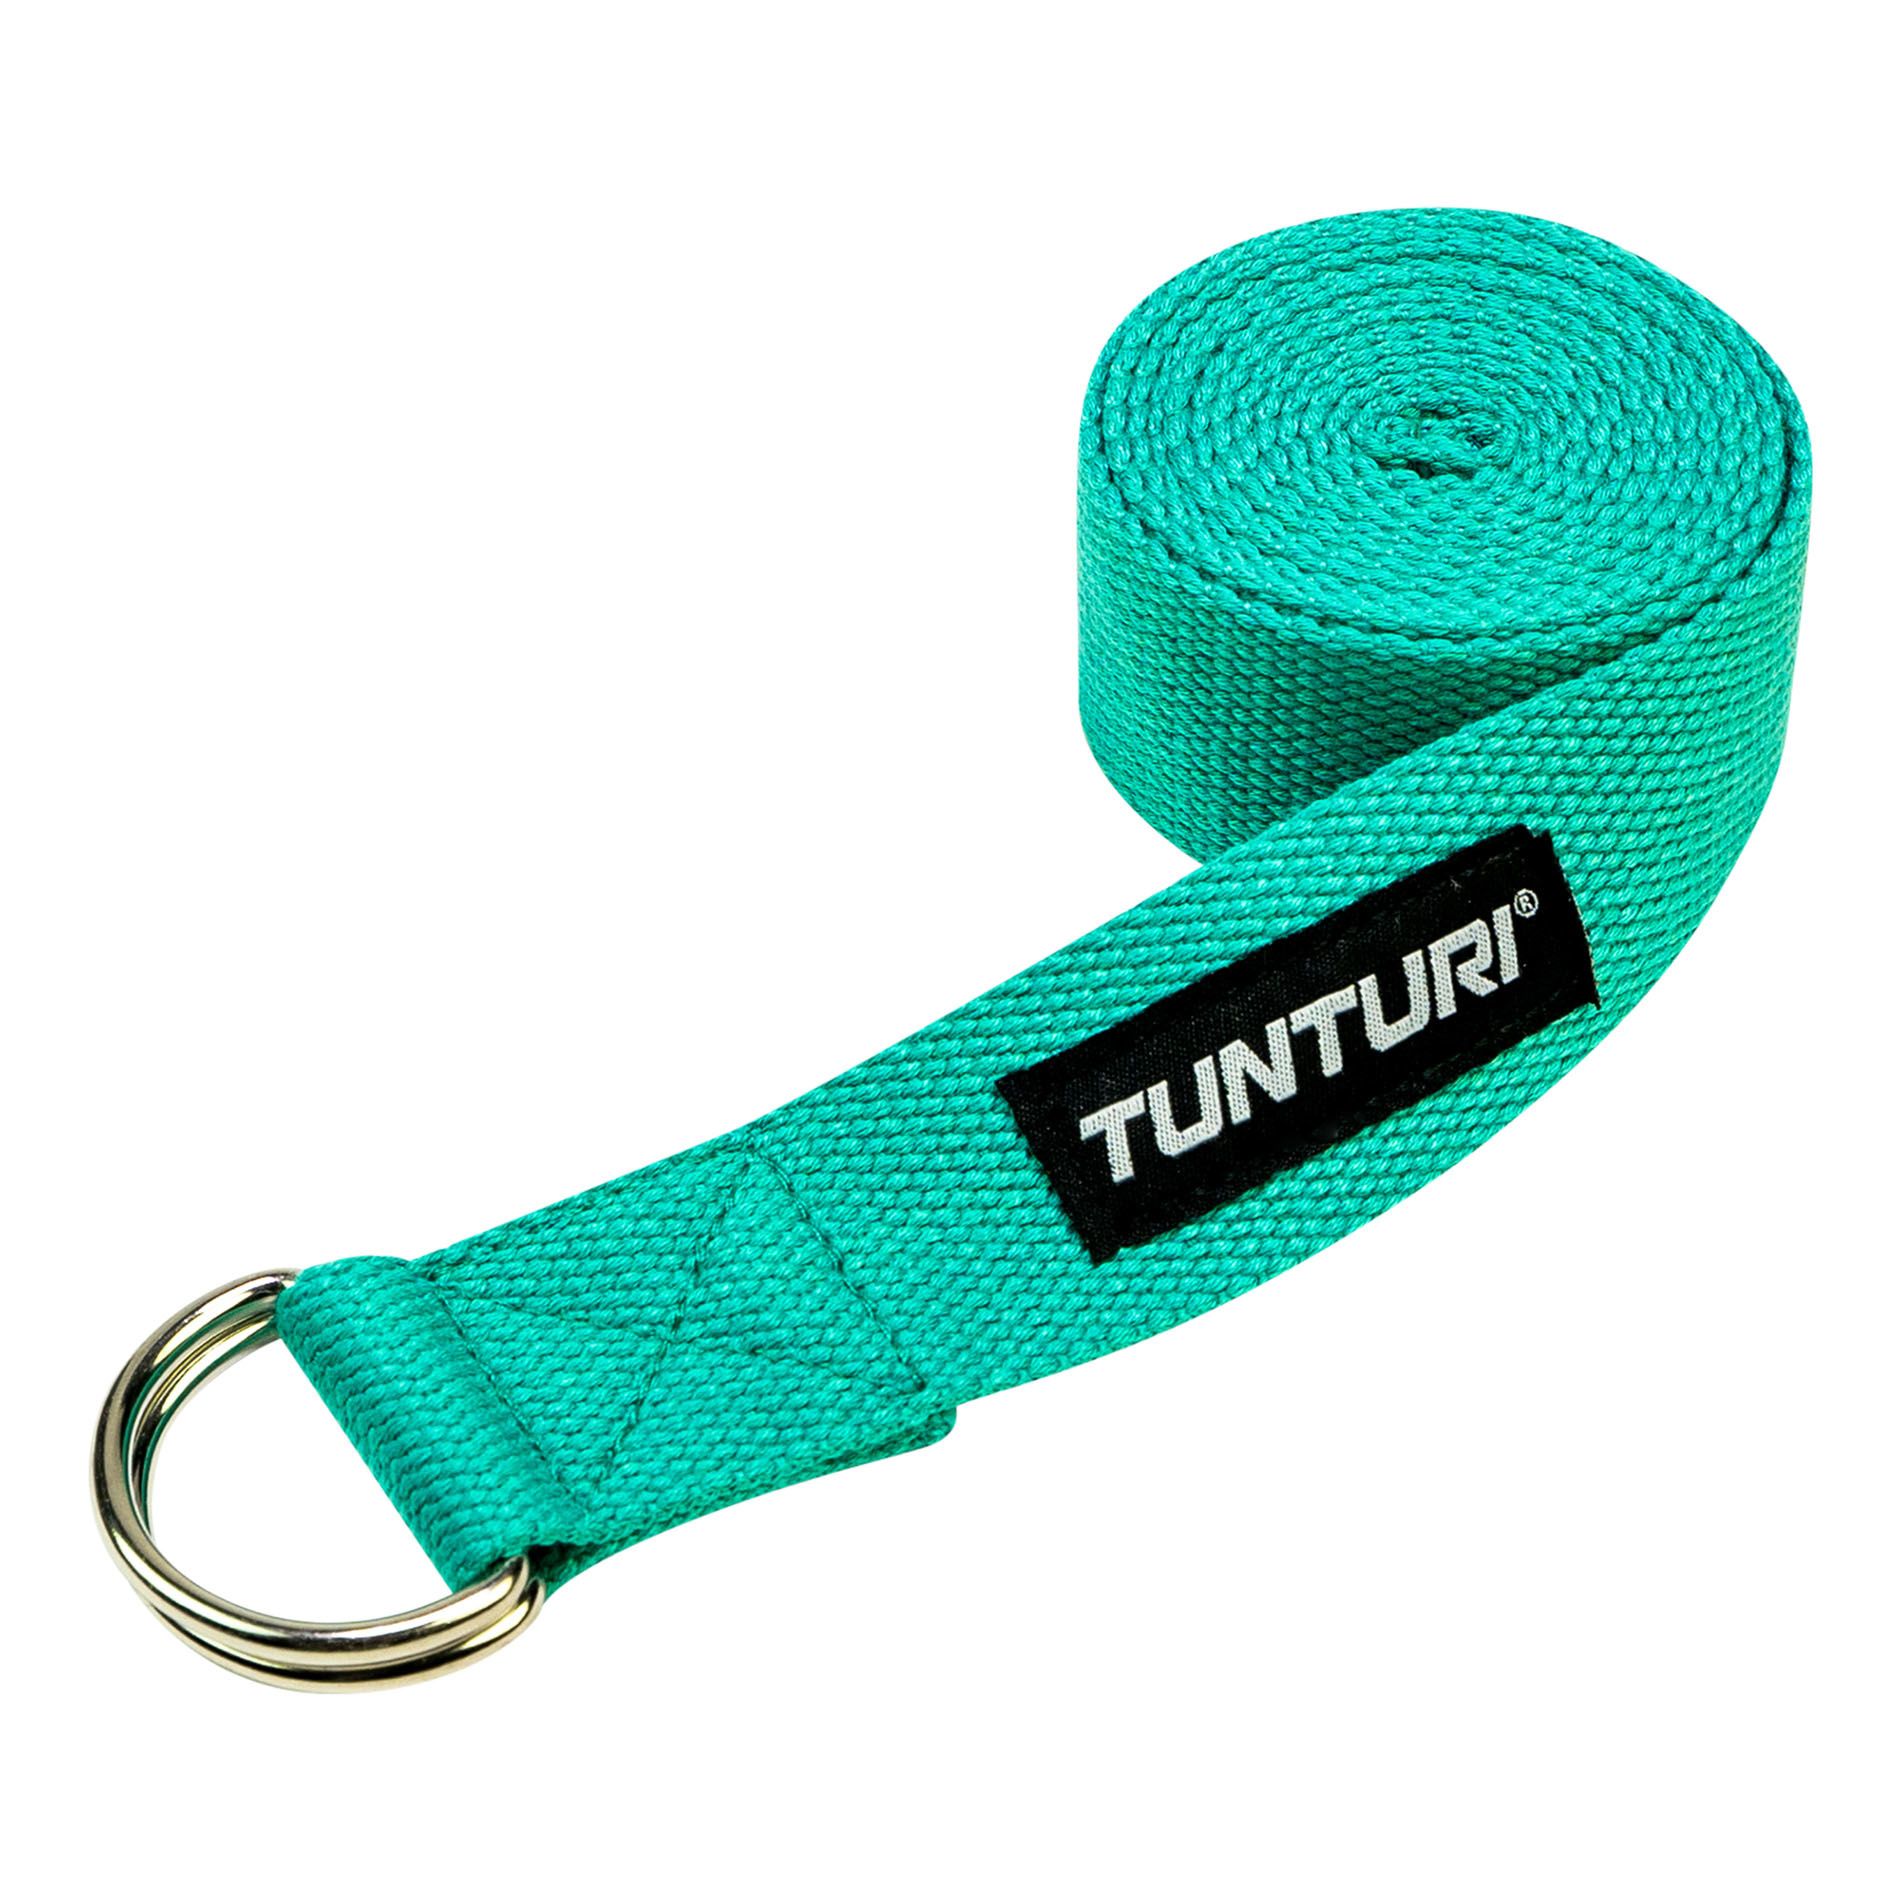 Yoga strap - yoga belt - 200cm - Turquoise - Tunturi New Fitness B.V.